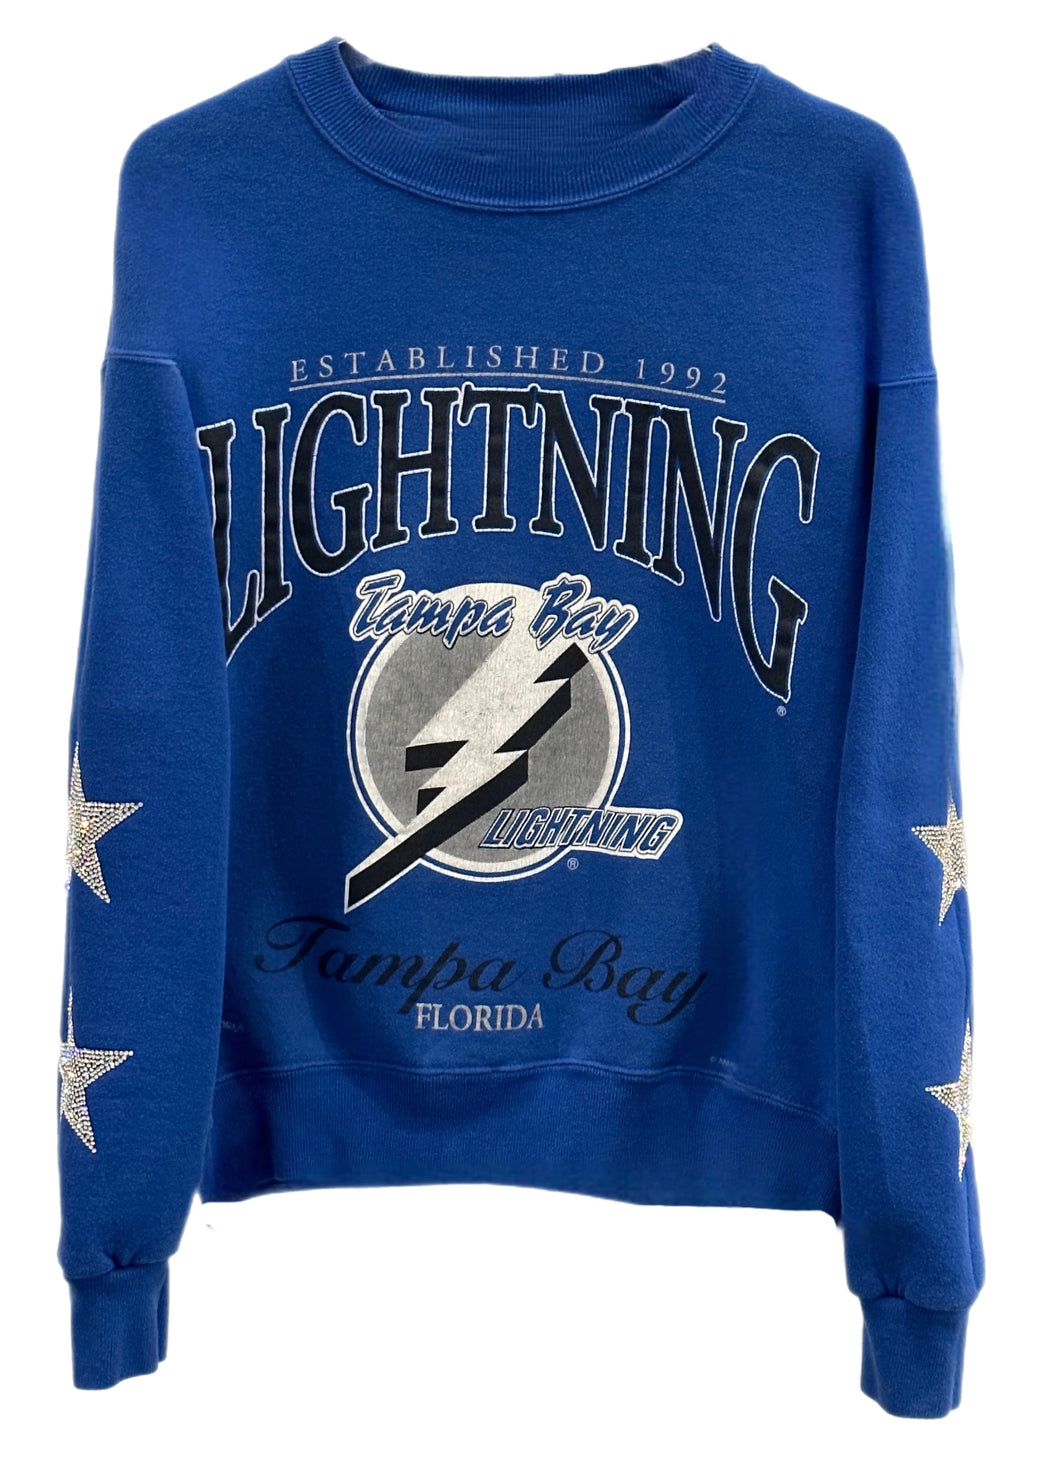 Tampa Bay Lightning, NHL One of a KIND Vintage Sweatshirt with Crystal Star Design, Custom Name & Number